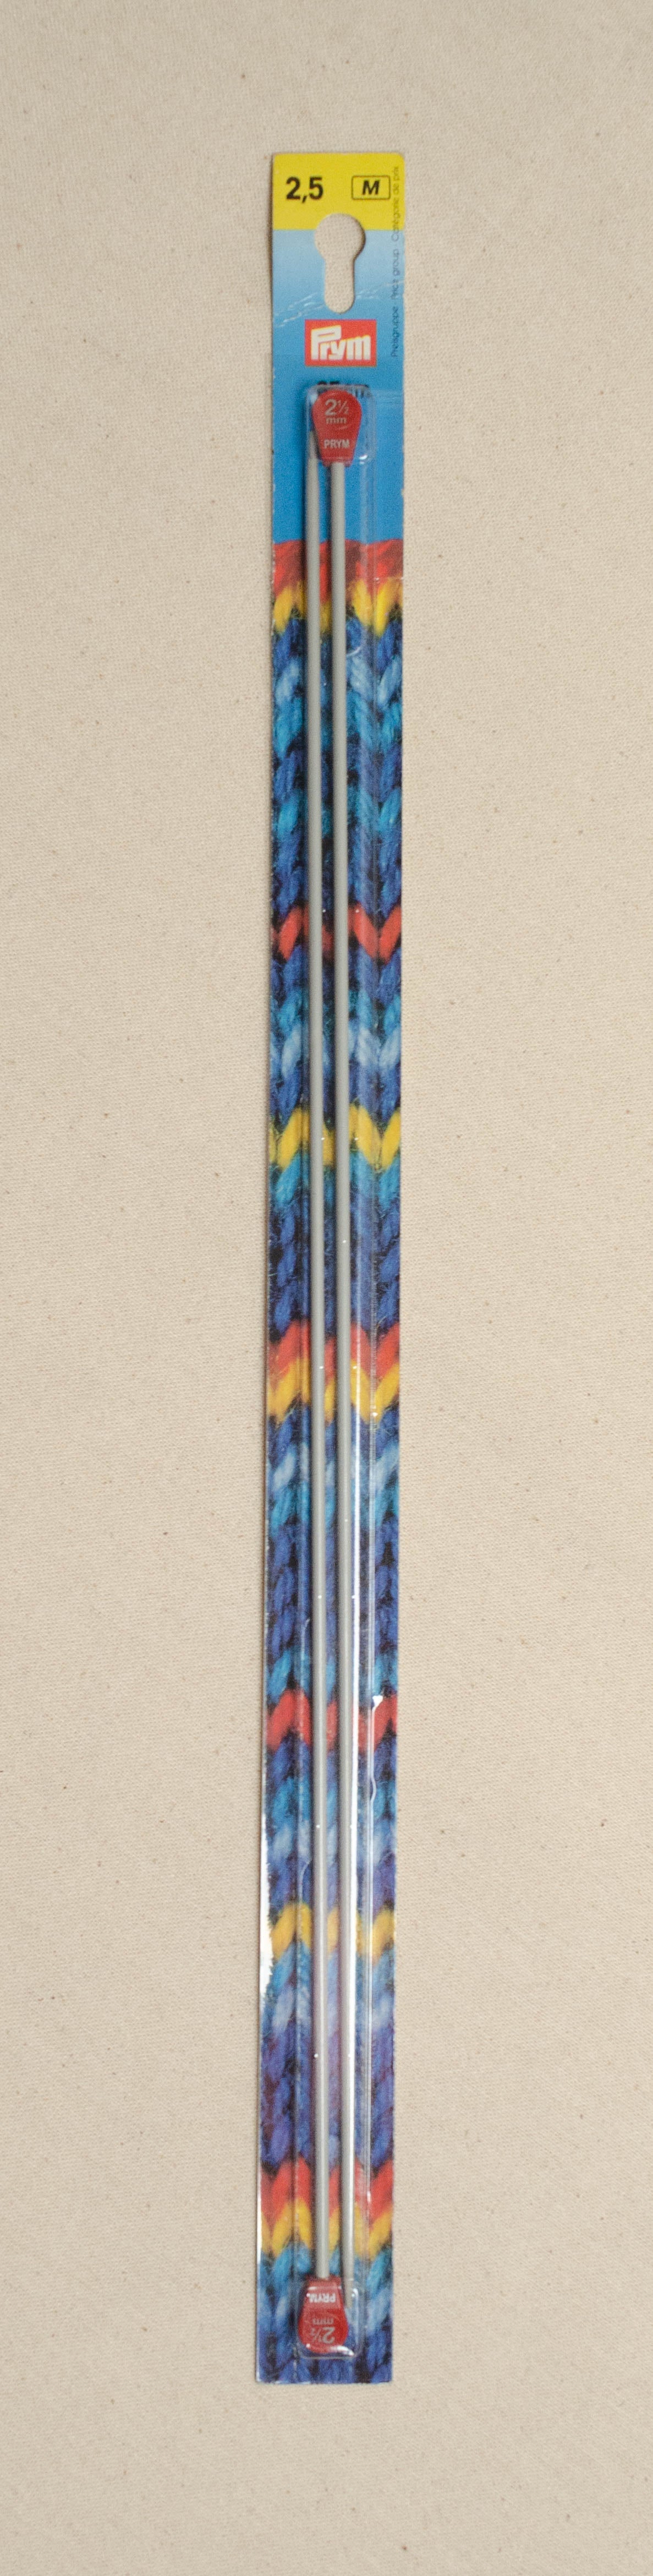 Prym 12 inch Double Point Aluminum Knitting Needles, 2.5mm